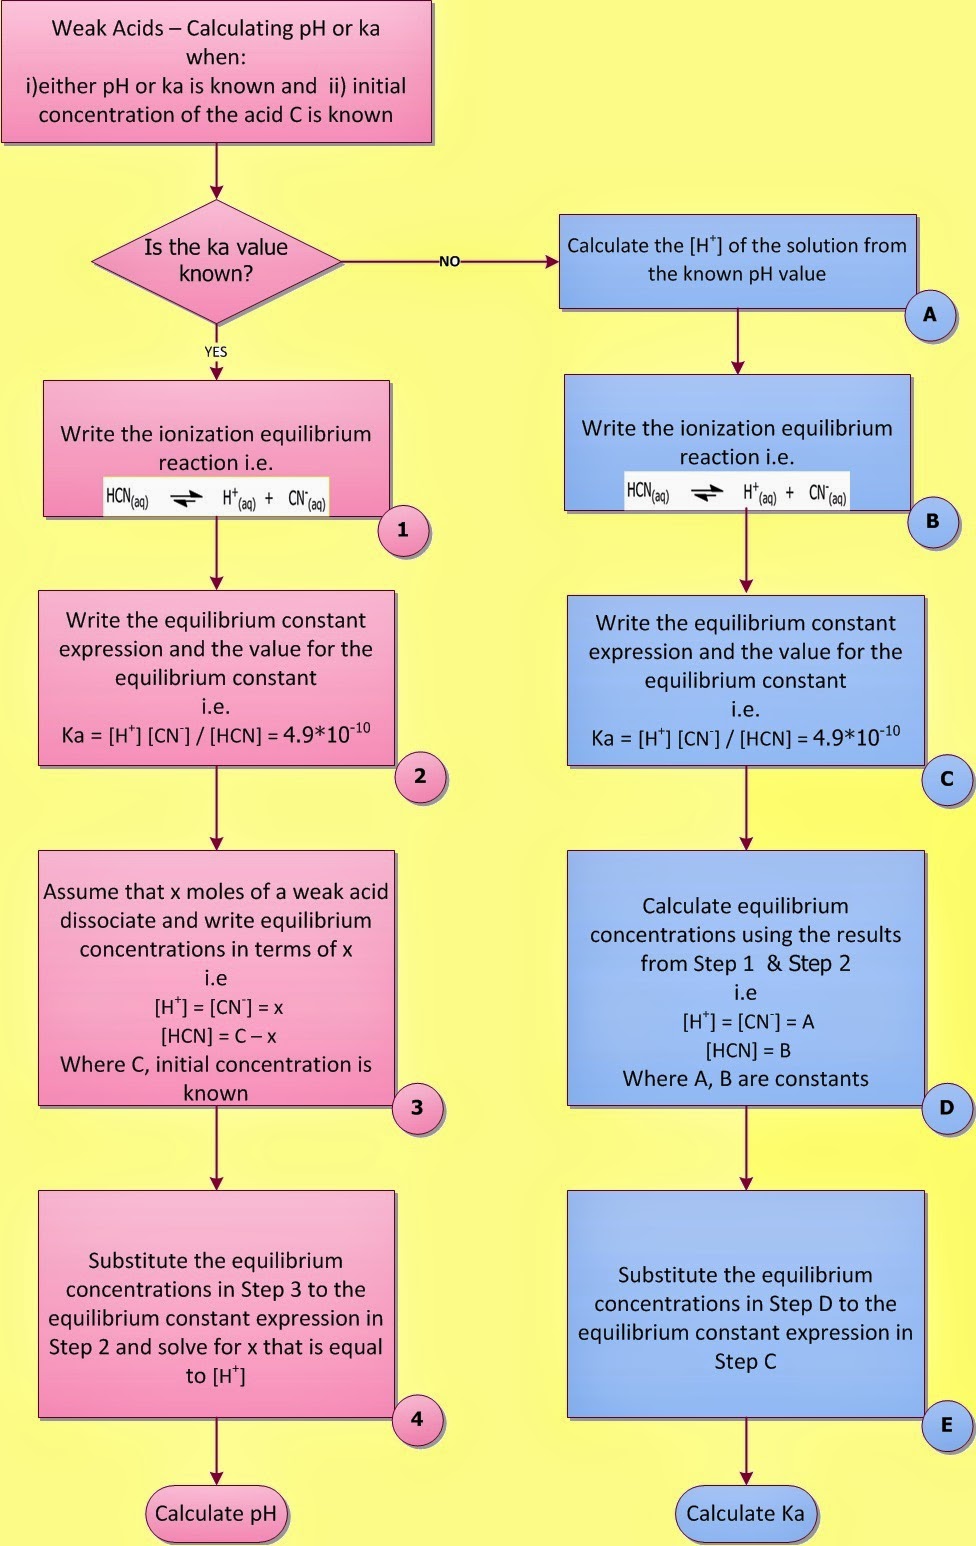 Fig. I.1: Flowchart regarding the calculation of pH of a weak acid